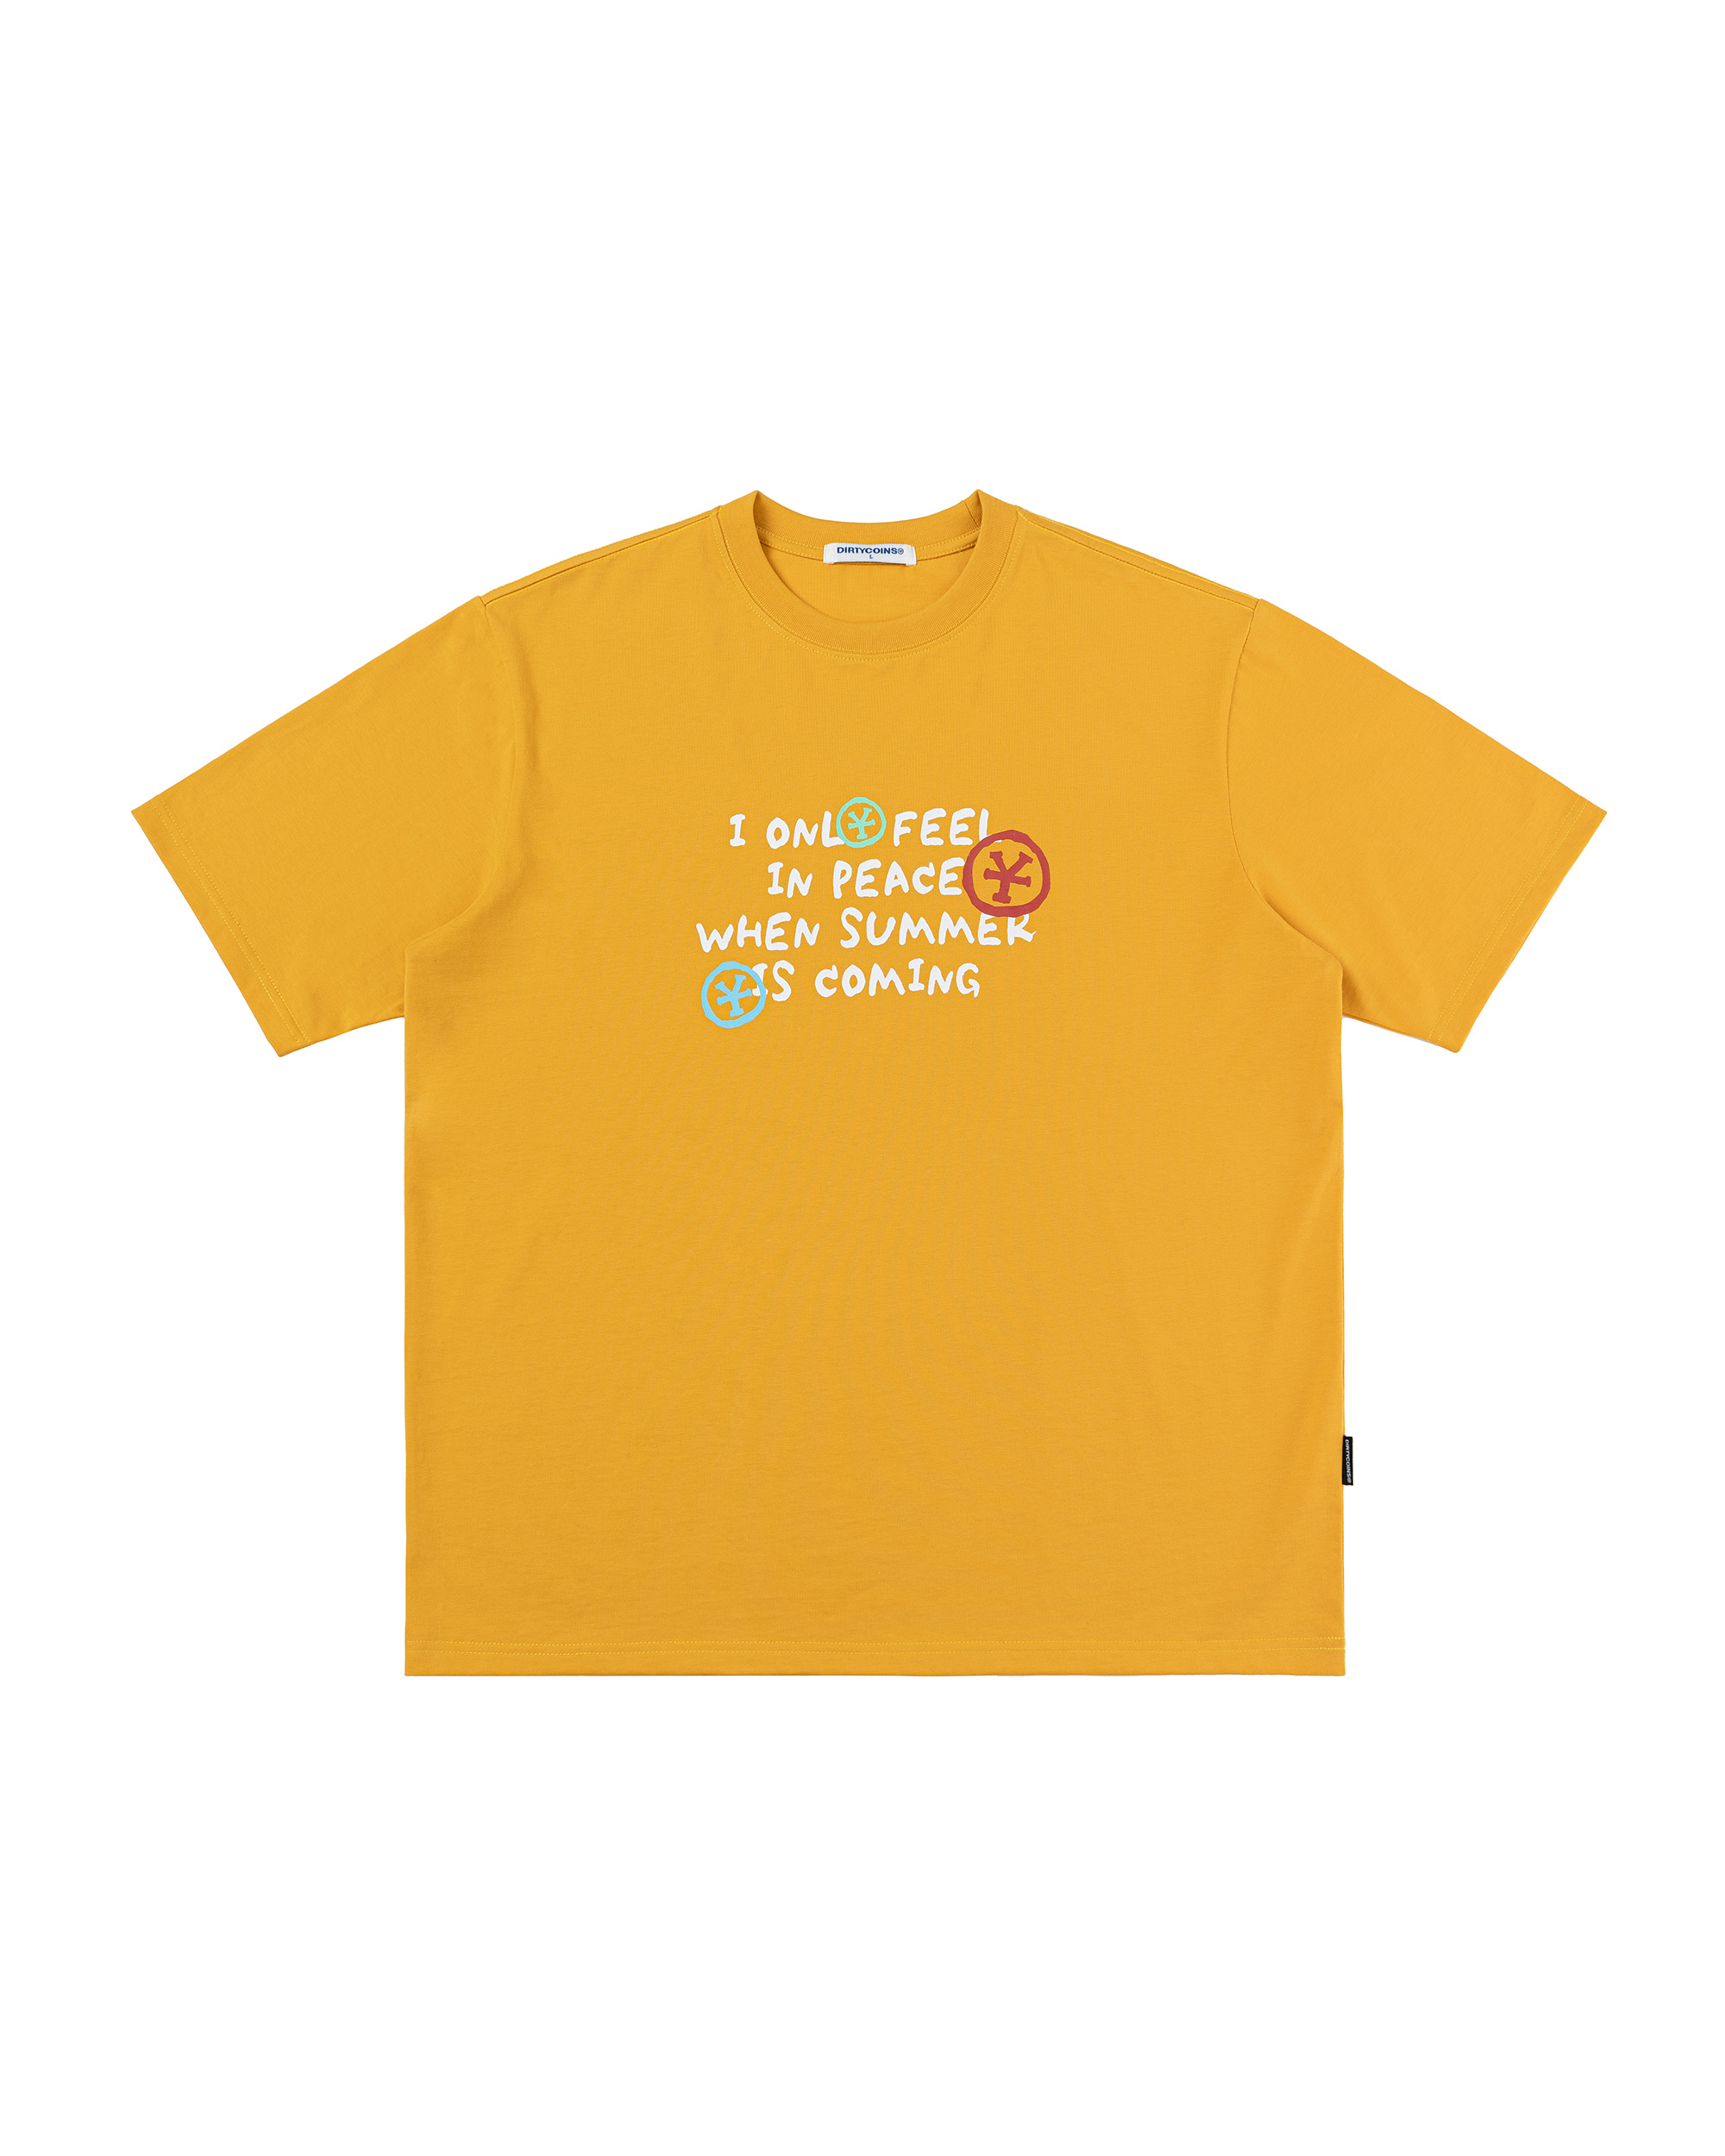 Feelin Peace T-shirt - Yellow